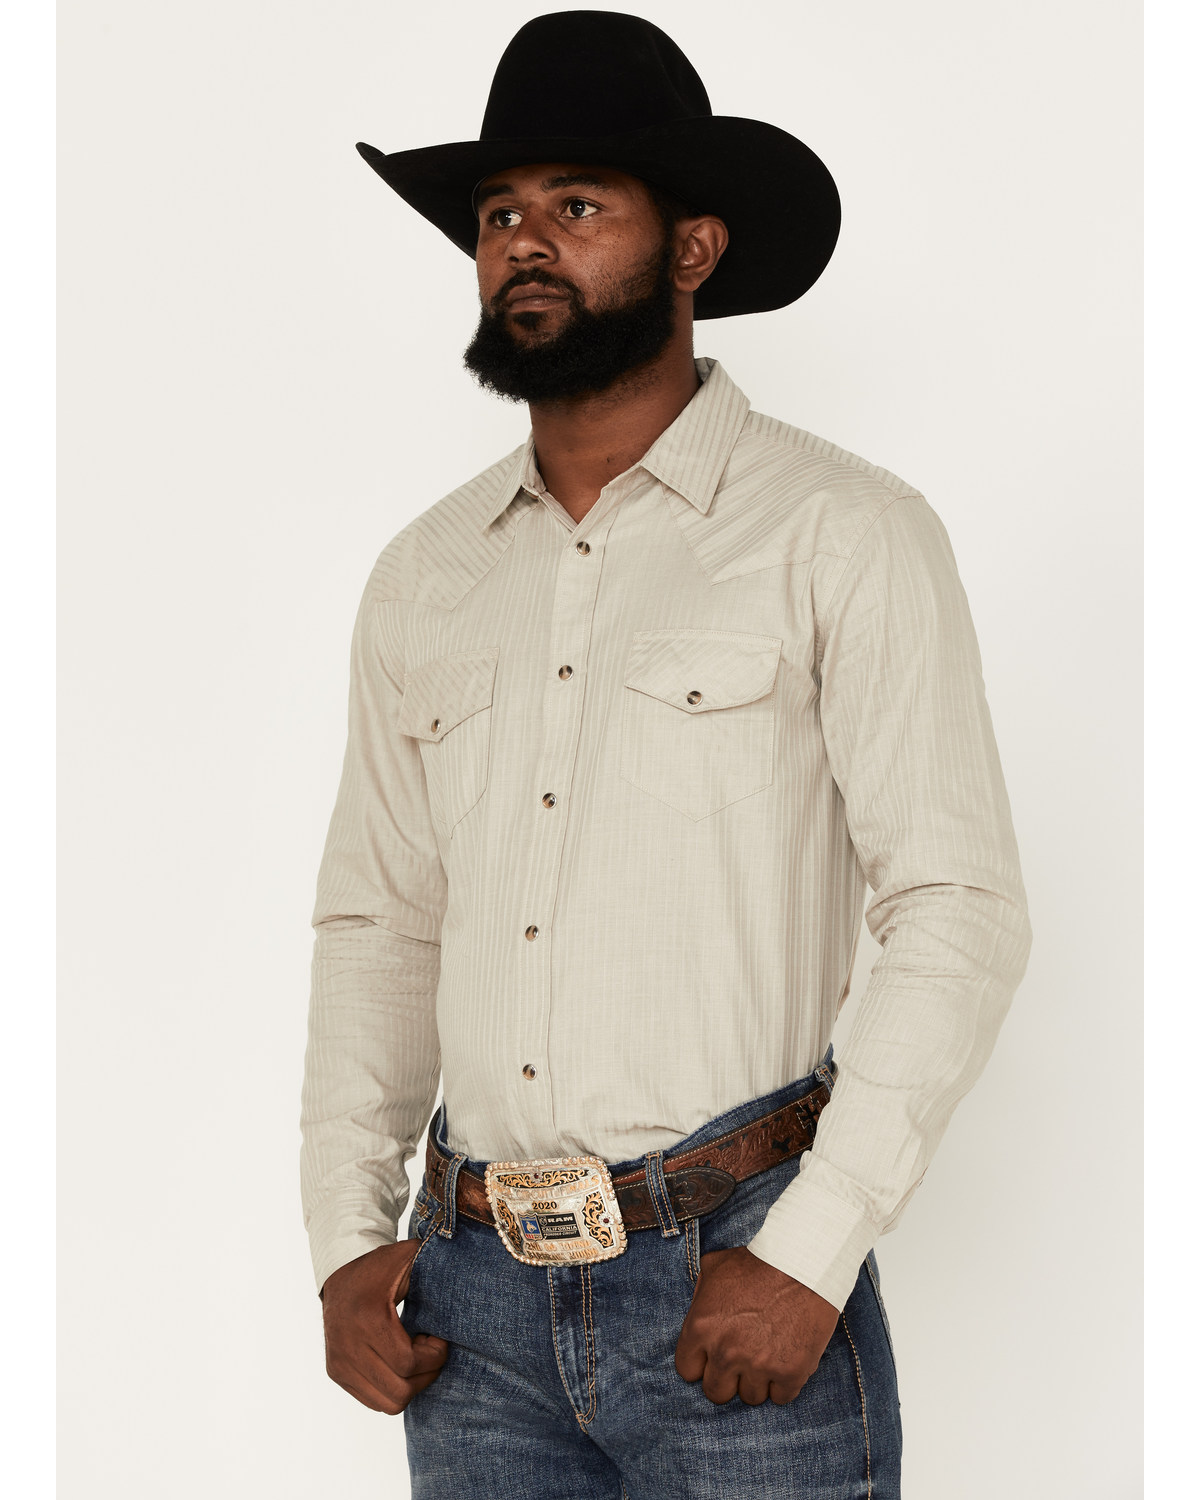 Gibson Men's Southside Satin Striped Long Sleeve Snap Western Shirt